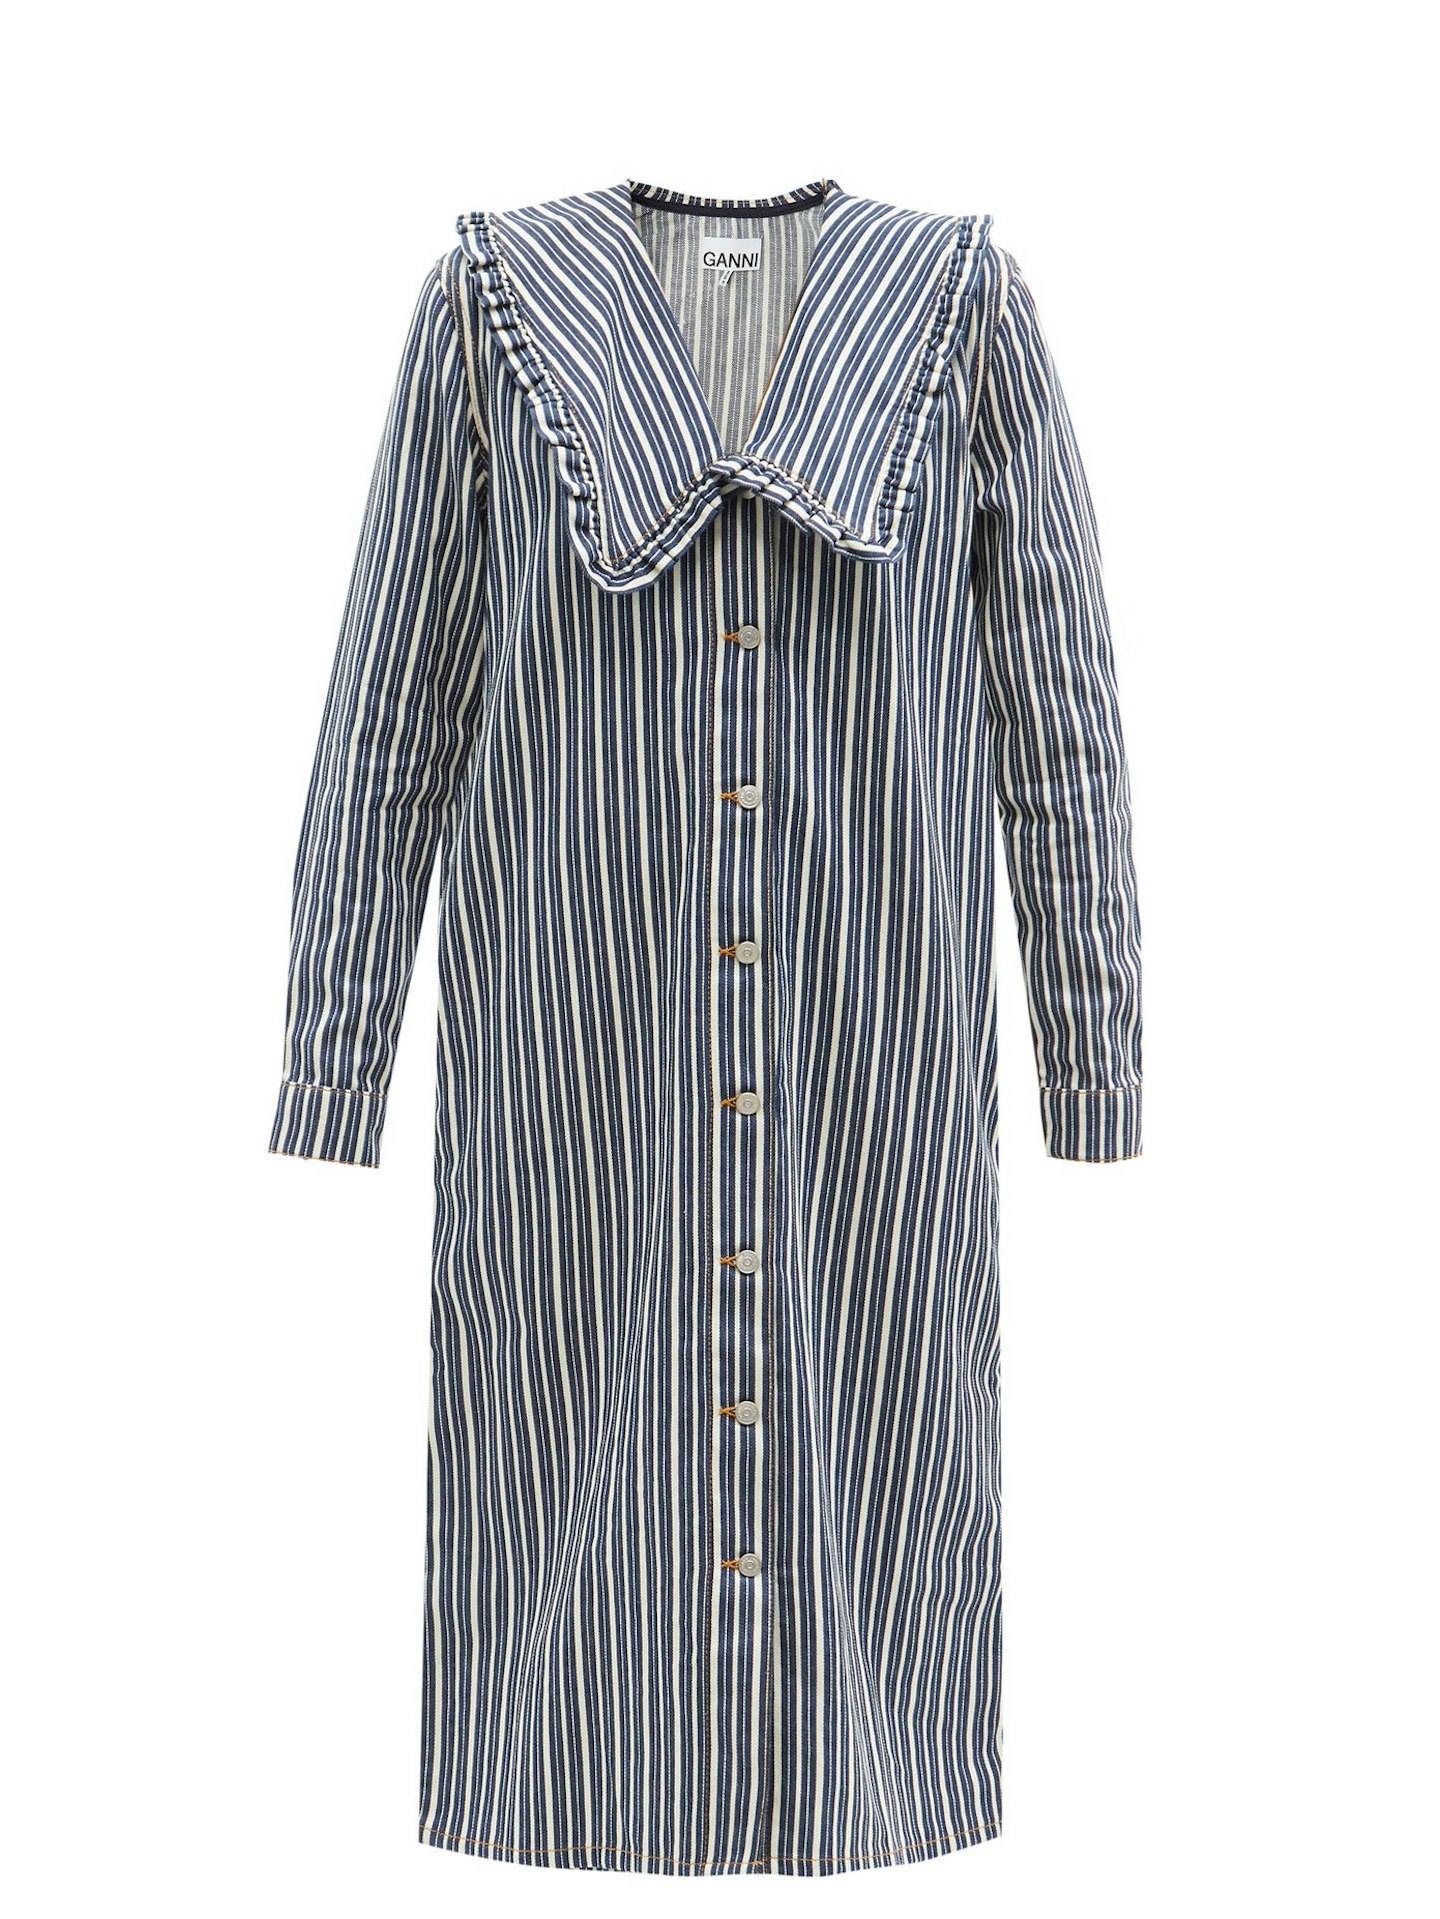 Ganni, Ruffled Collar Striped Denim Dress, £225